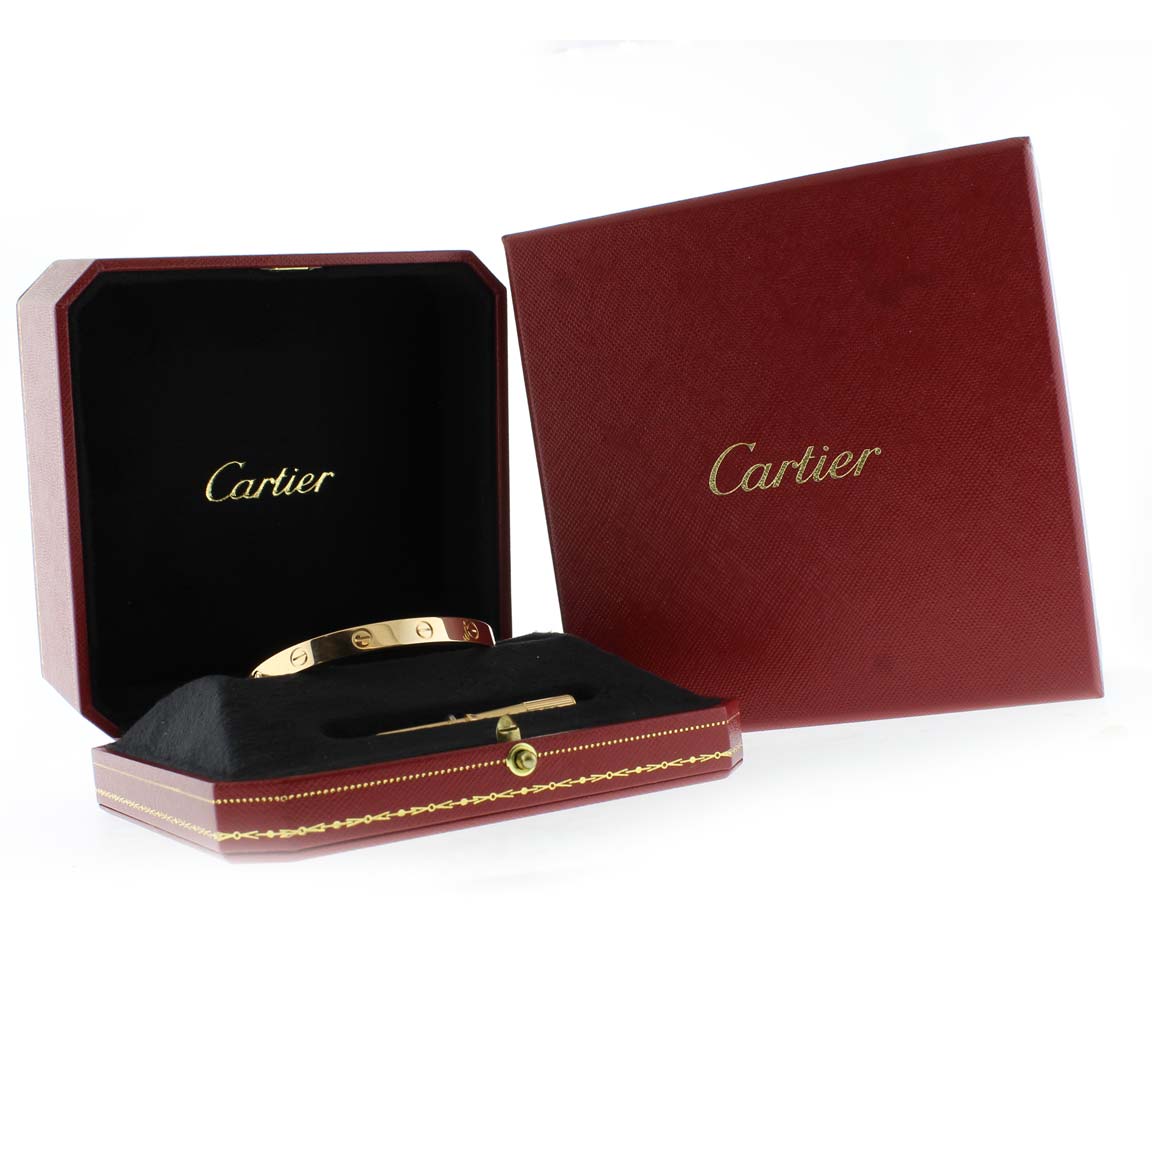 Cartier Love Bracelet Rose Gold Size 17 B6035617